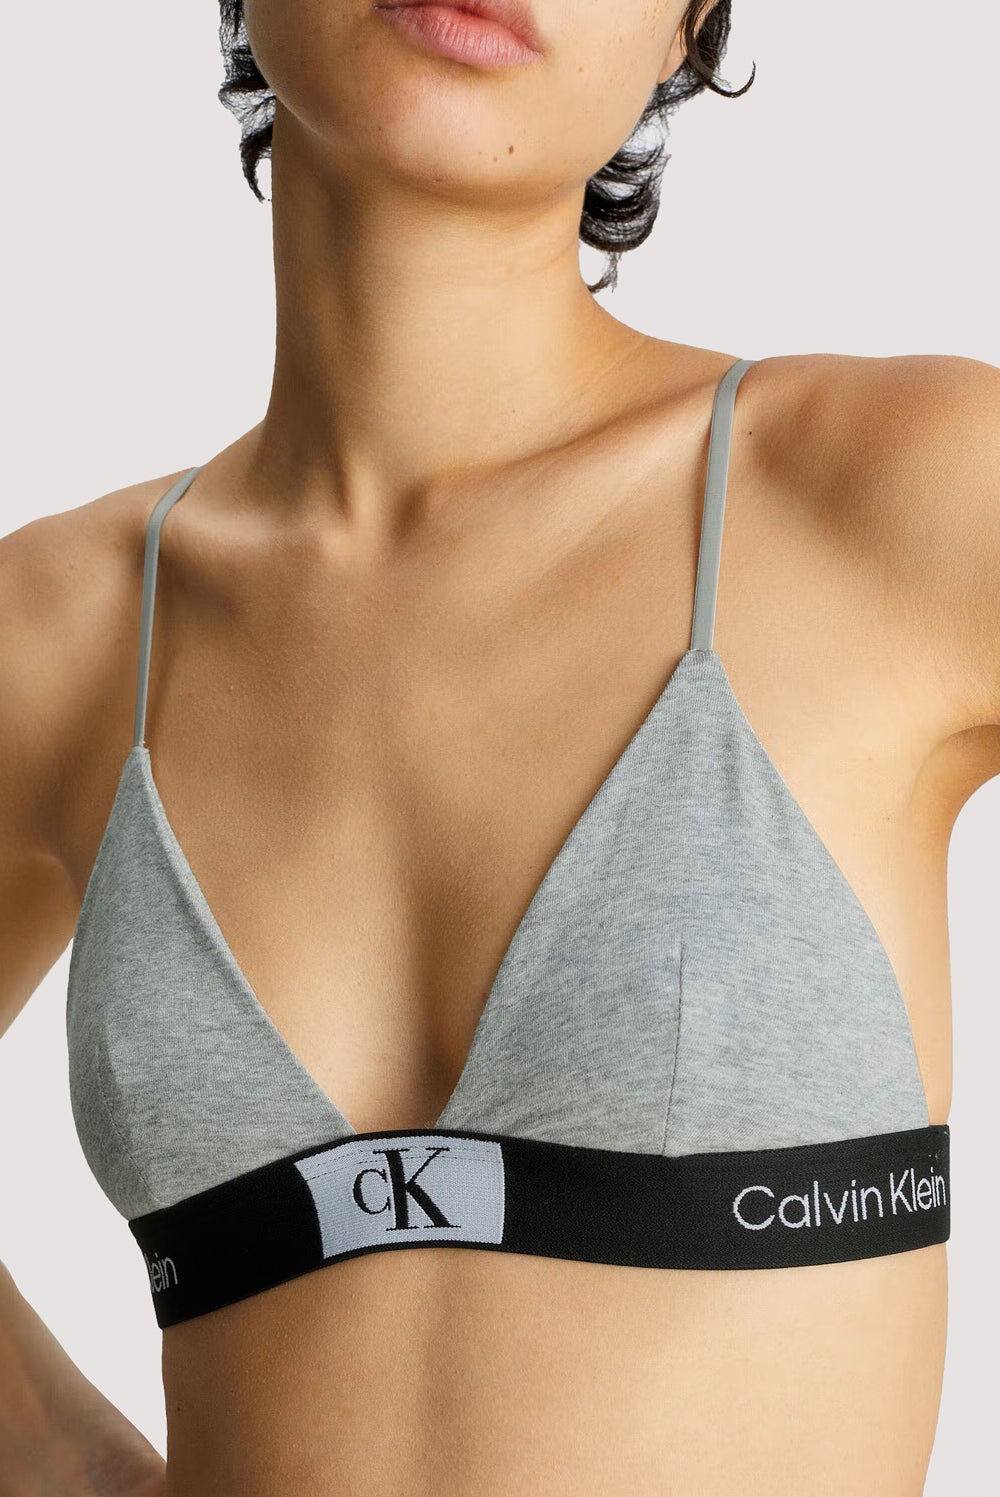  Calvin Klein Women's Monogram Unlined Triangle Bra